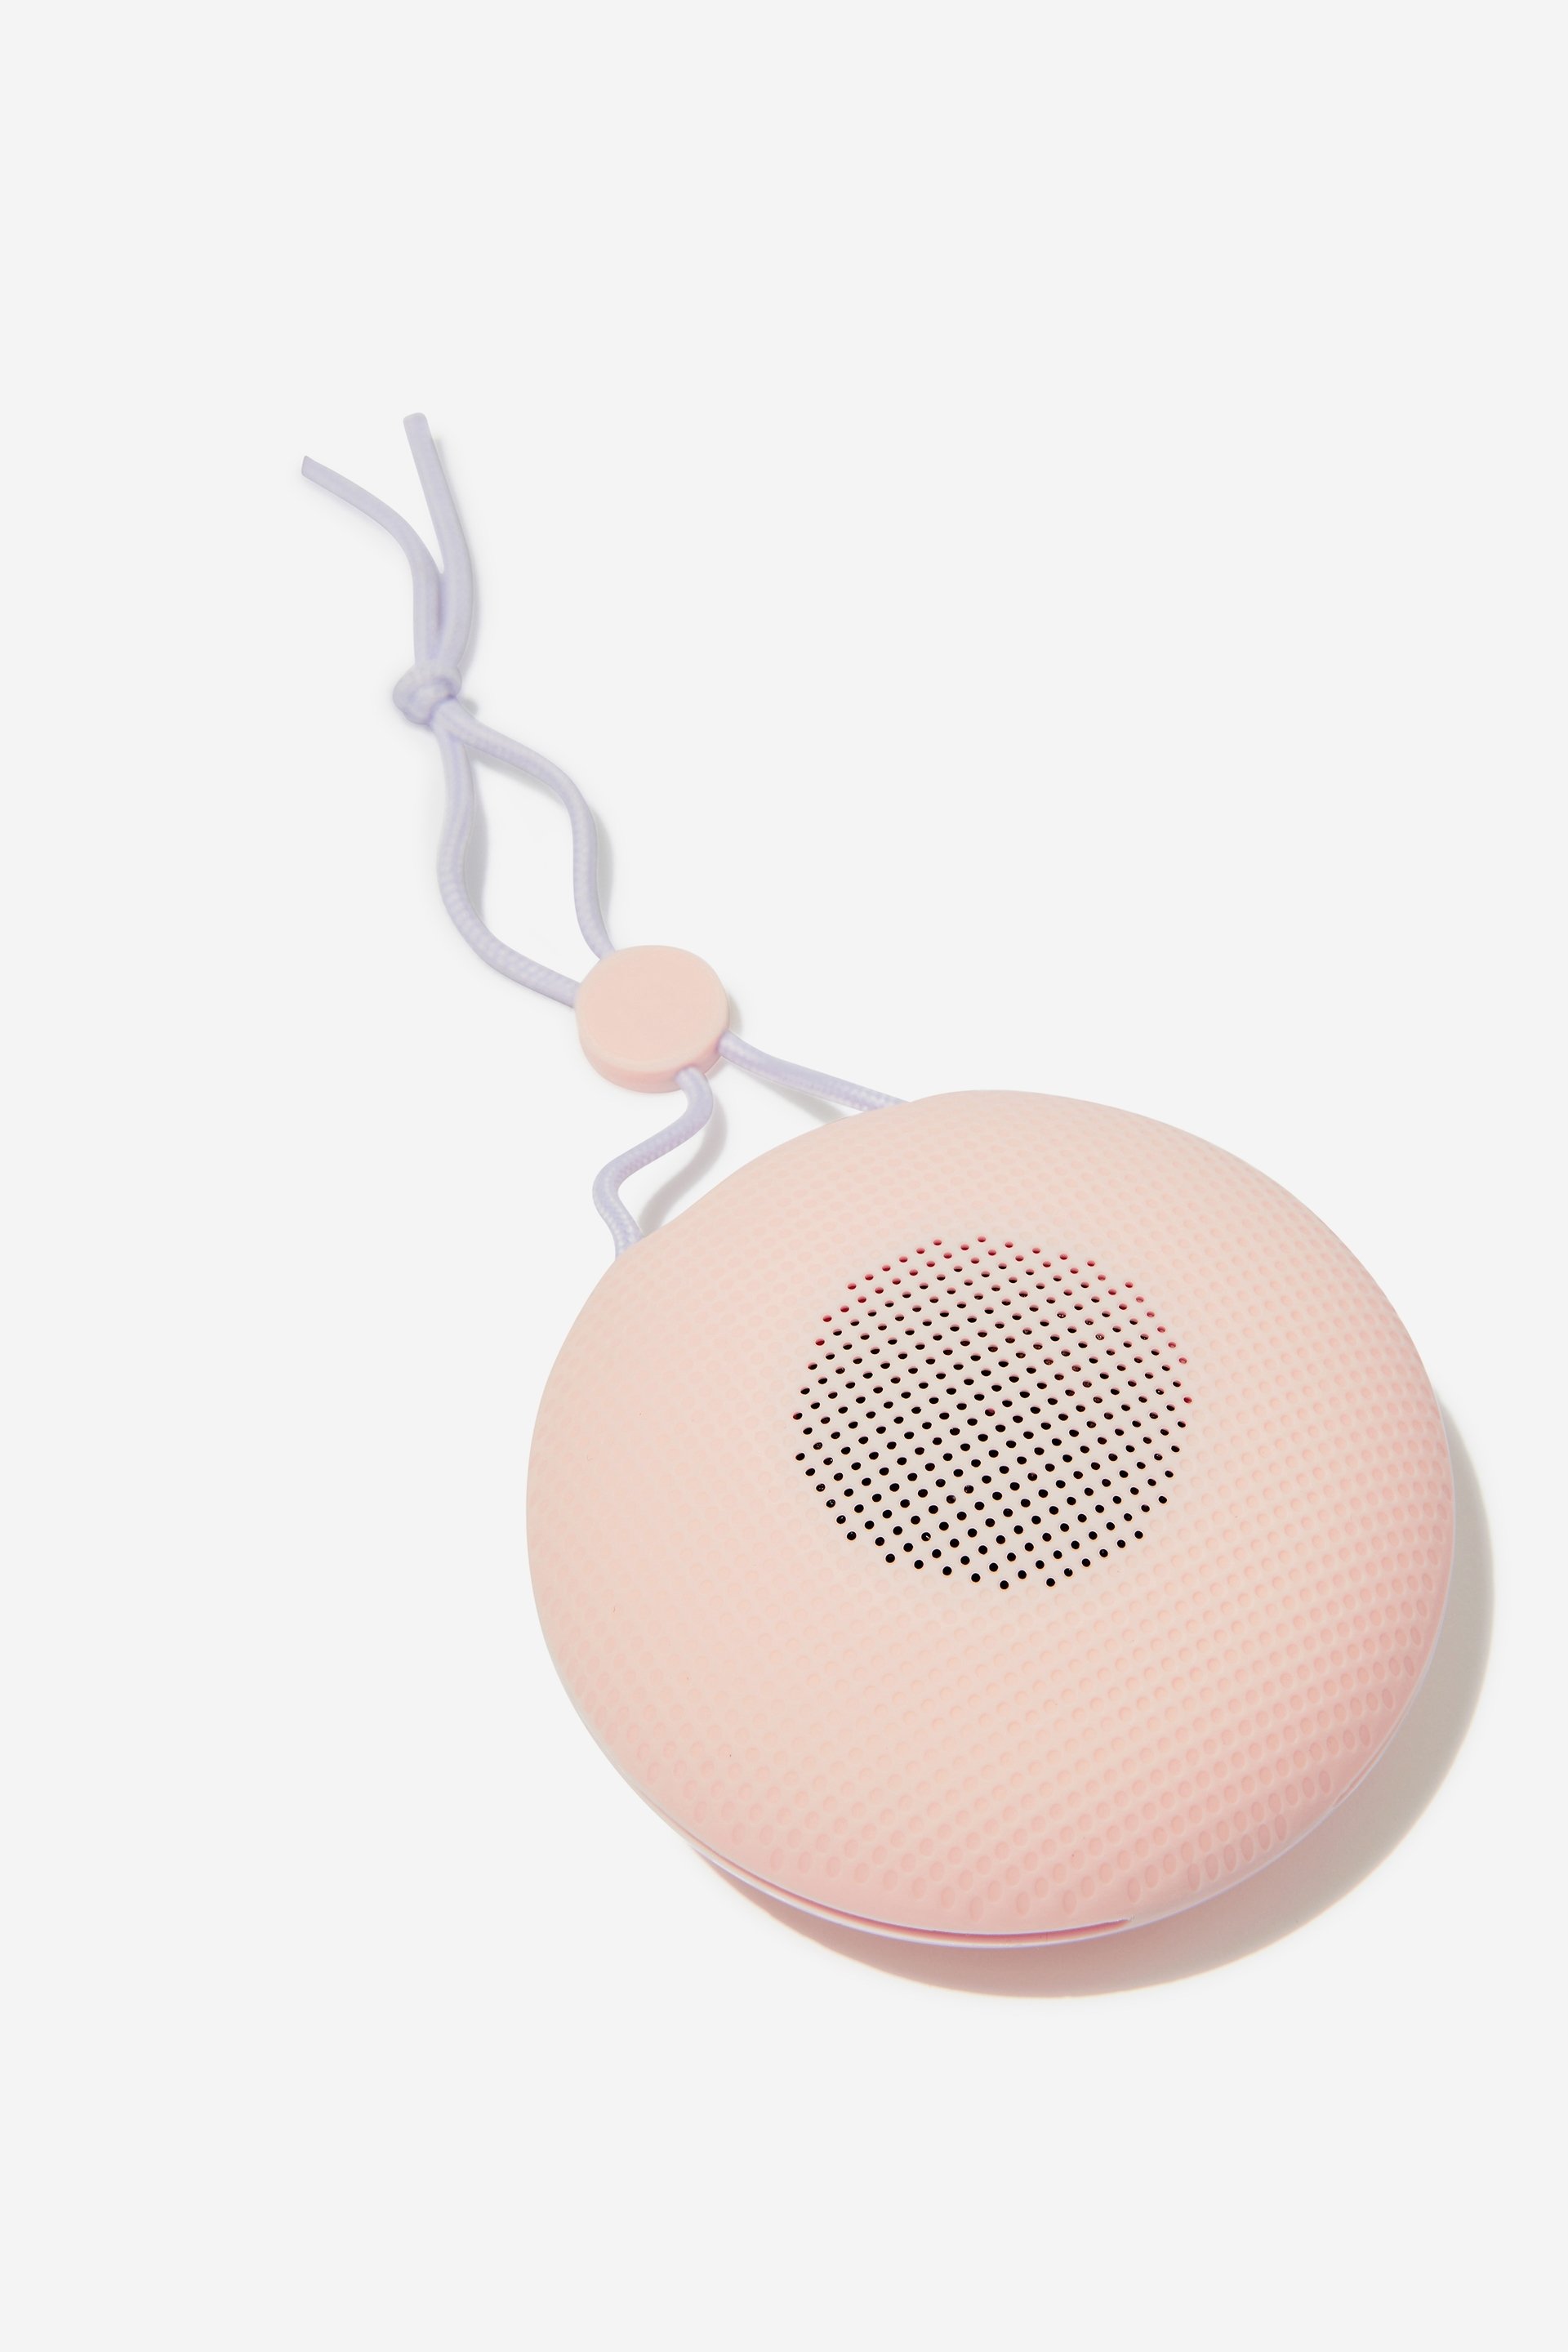 Typo - Soundvibe Waterproof Wireless Speaker - Ballet blush